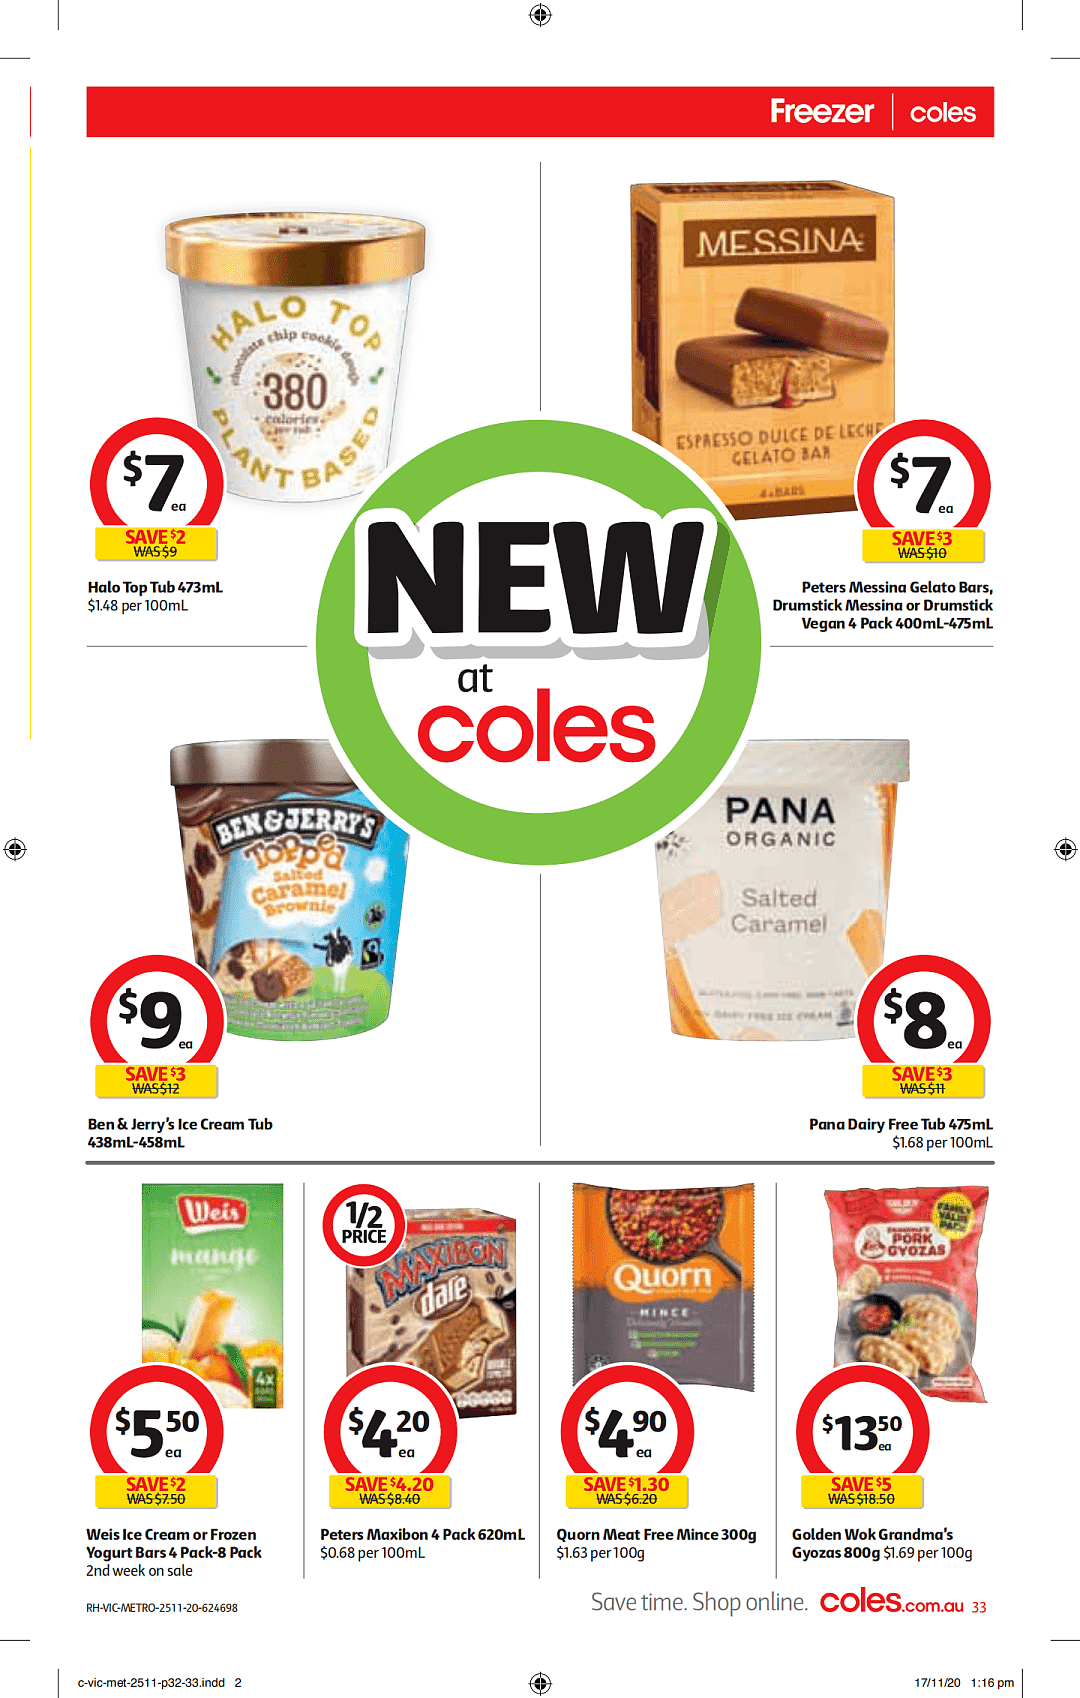 Coles 11月25日-12月1日折扣，清洁用品、冰淇淋半价 - 33